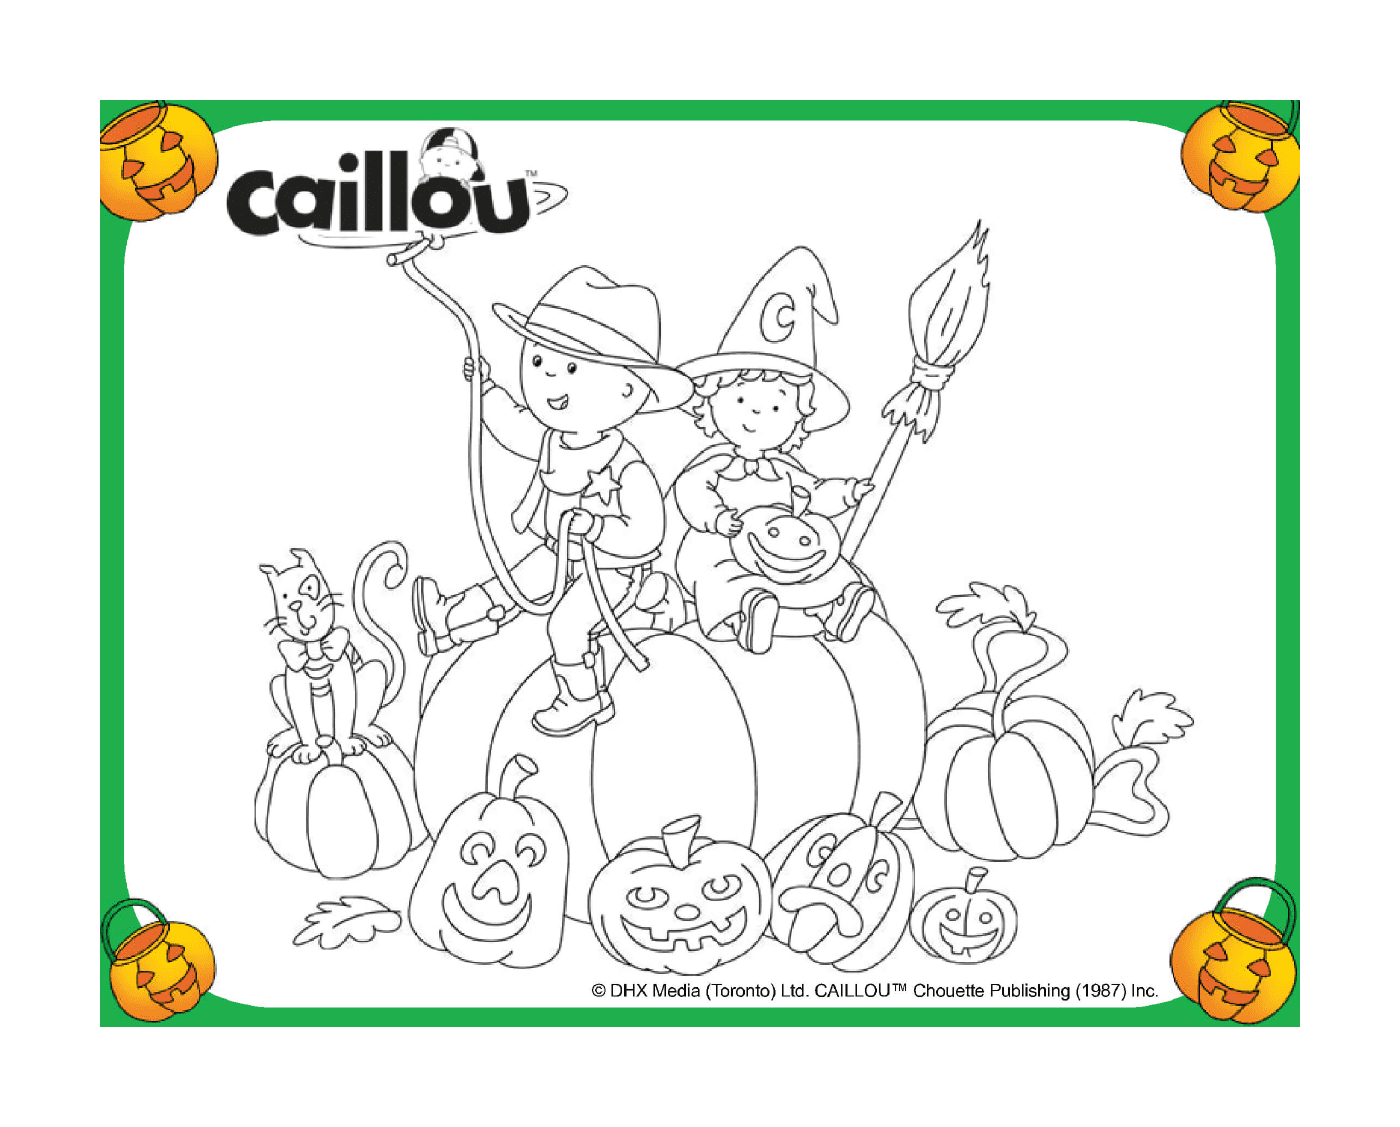  Caillou and Chiffon celebrate Halloween on a pumpkin 